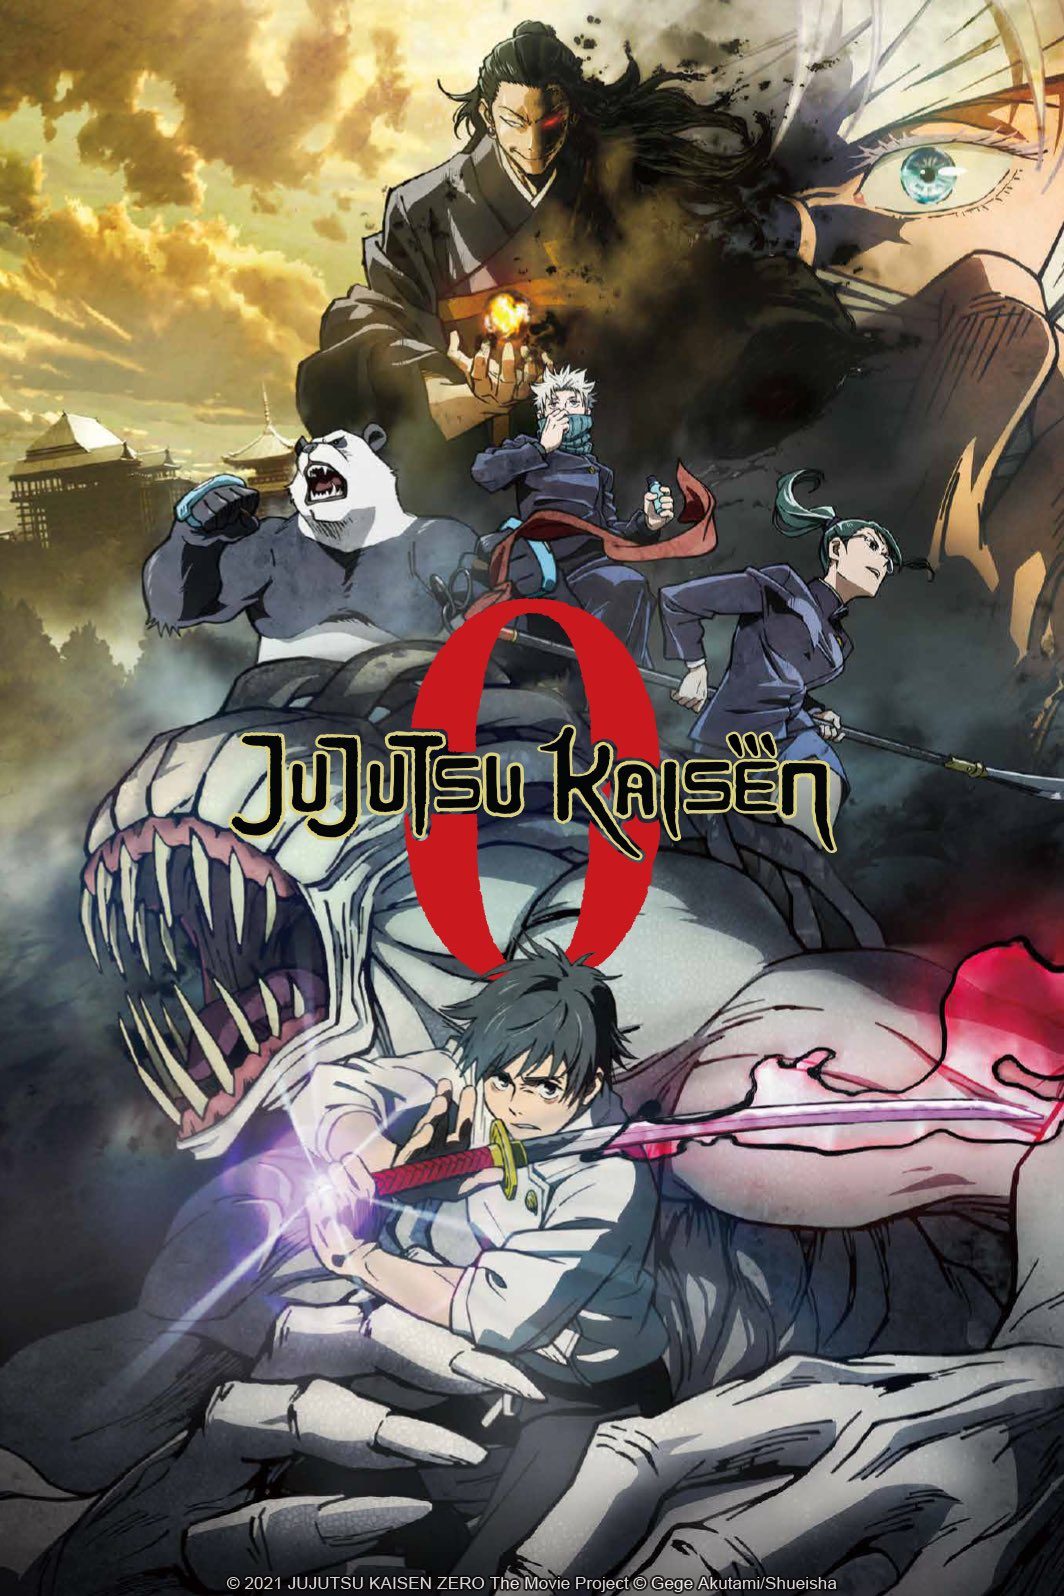 Jujutsu Kaisen 0 movie international release